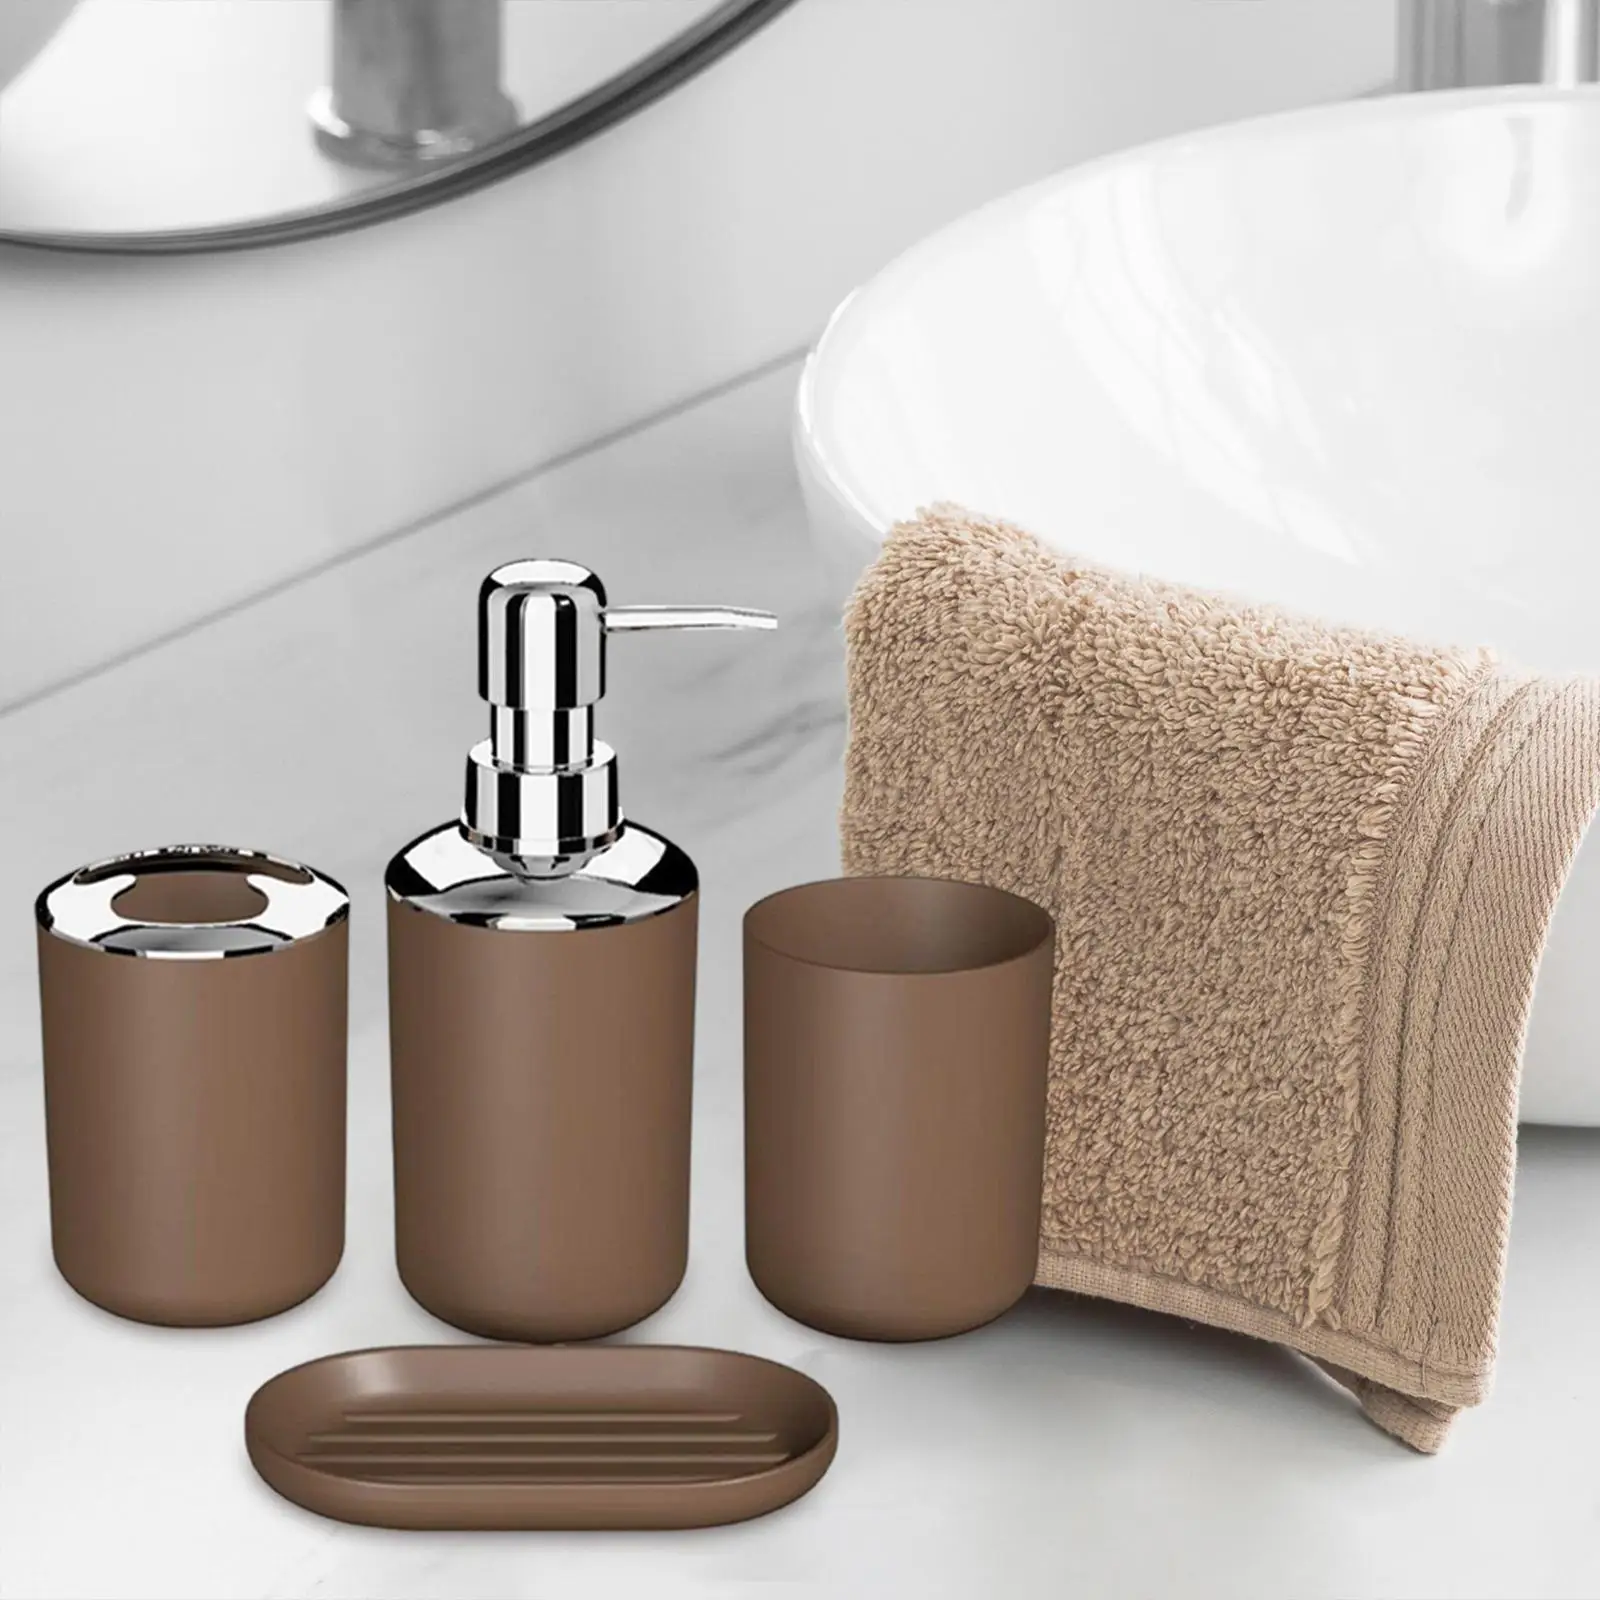 4 Pieces Bathroom Accessories Set & Tumbler Countertop Decor Neat Vanity Organizer Hand Soap Dispenser for Hotels Homes